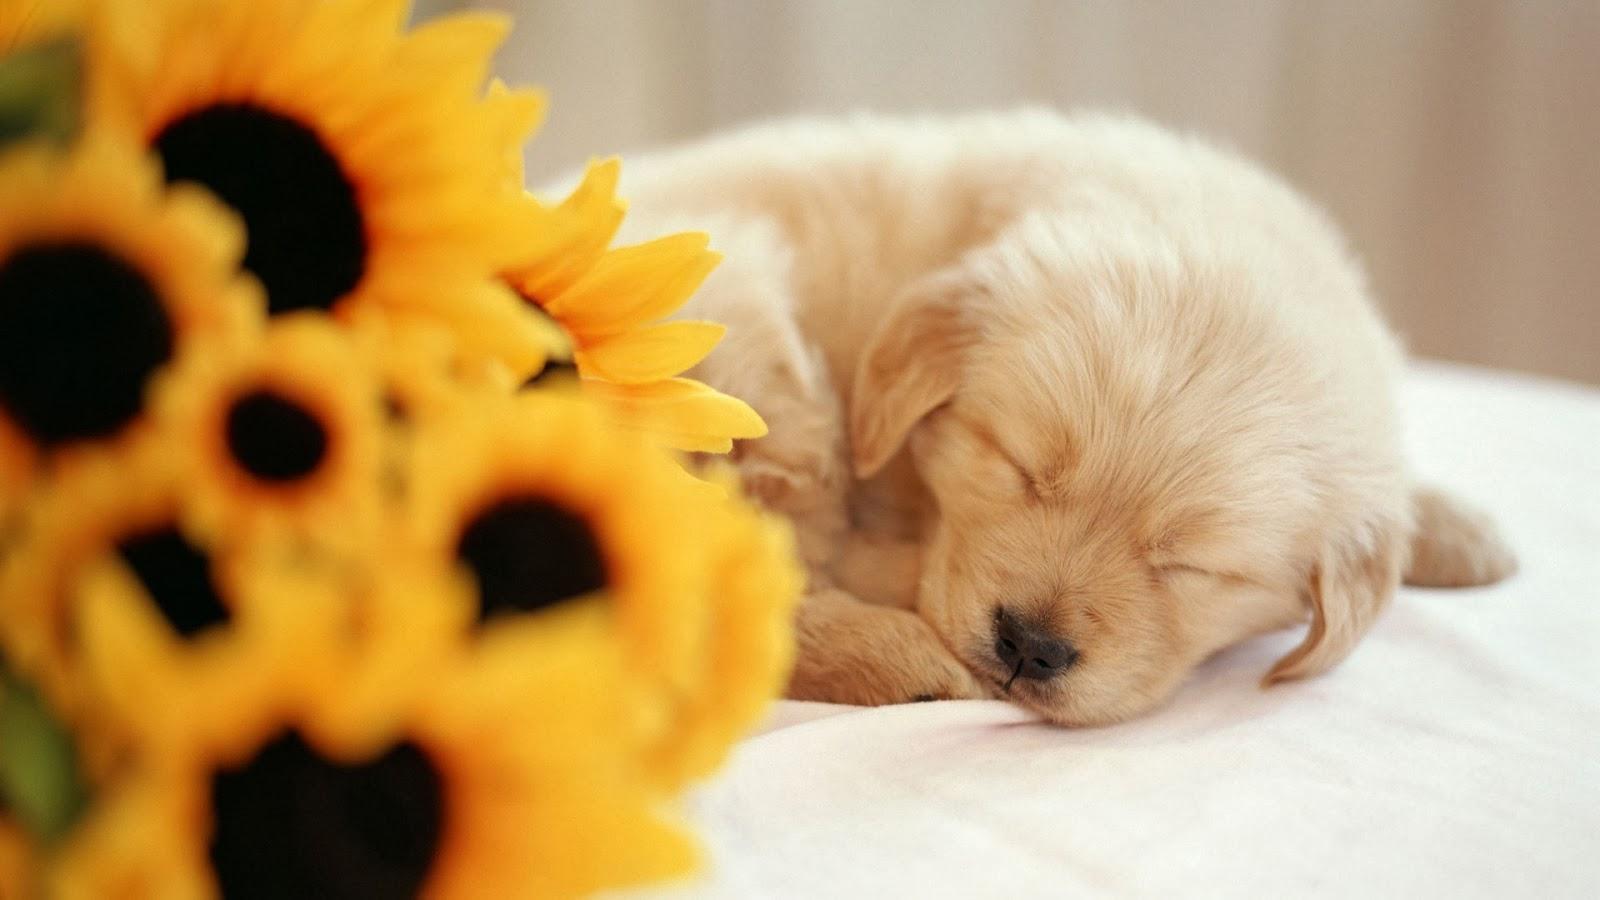 Cute Sleeping Puppy Animal Wallpaper